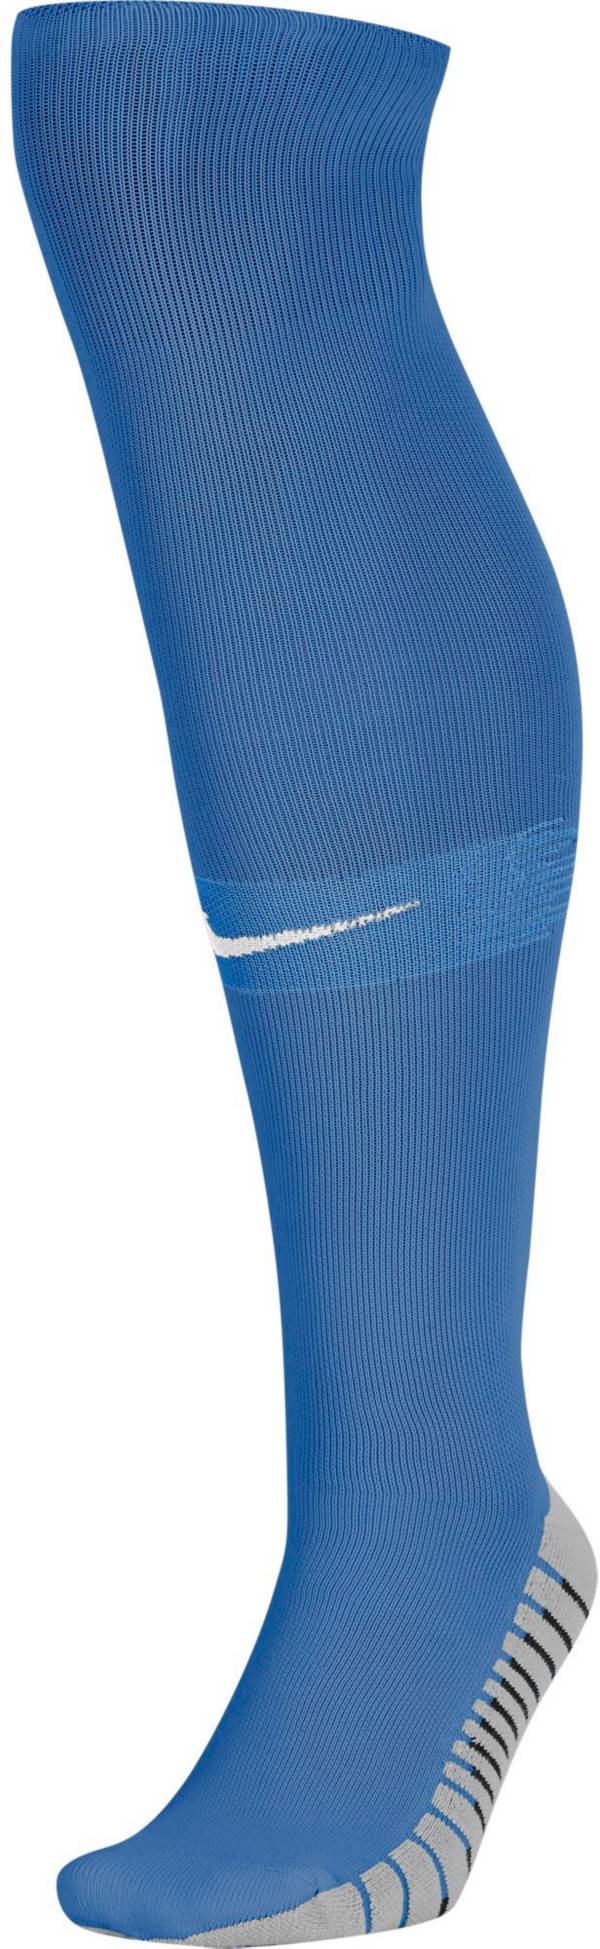 procedure achtergrond beha Nike MatchFit Over-The-Calf Soccer Socks | Dick's Sporting Goods